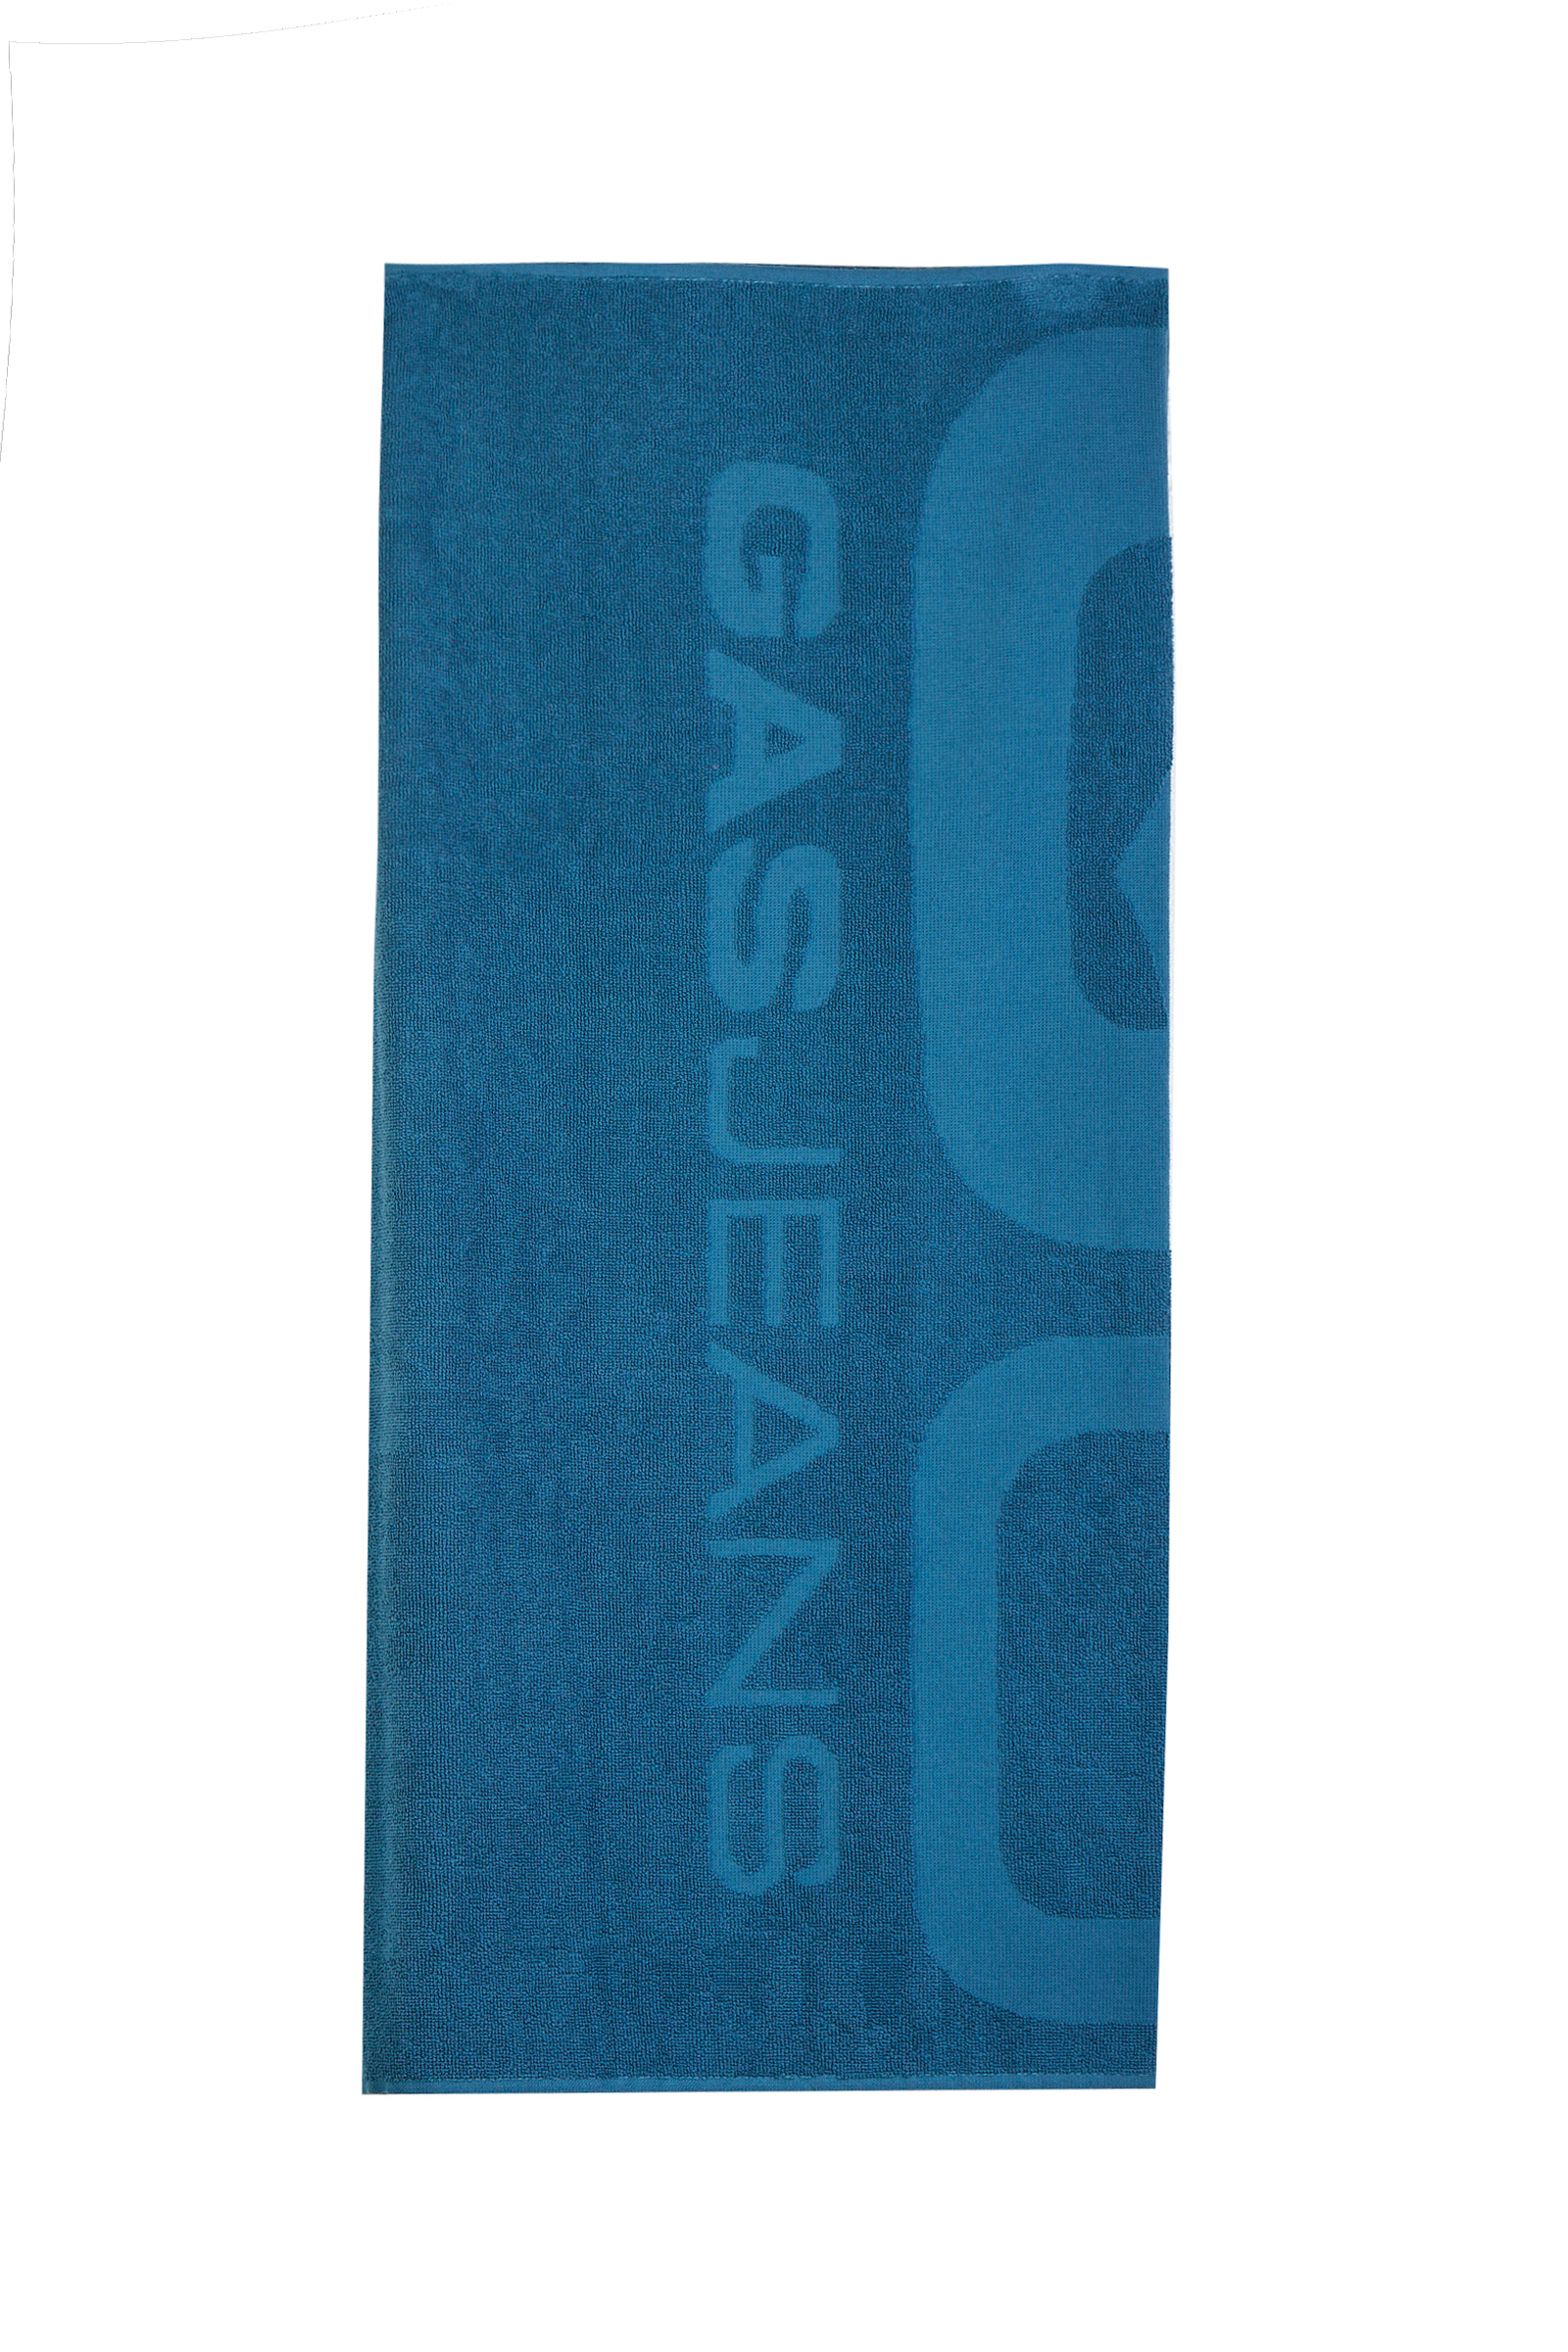 GAS TELO MARE GATM01 BASIC AB30 MOROCCAN BLUE